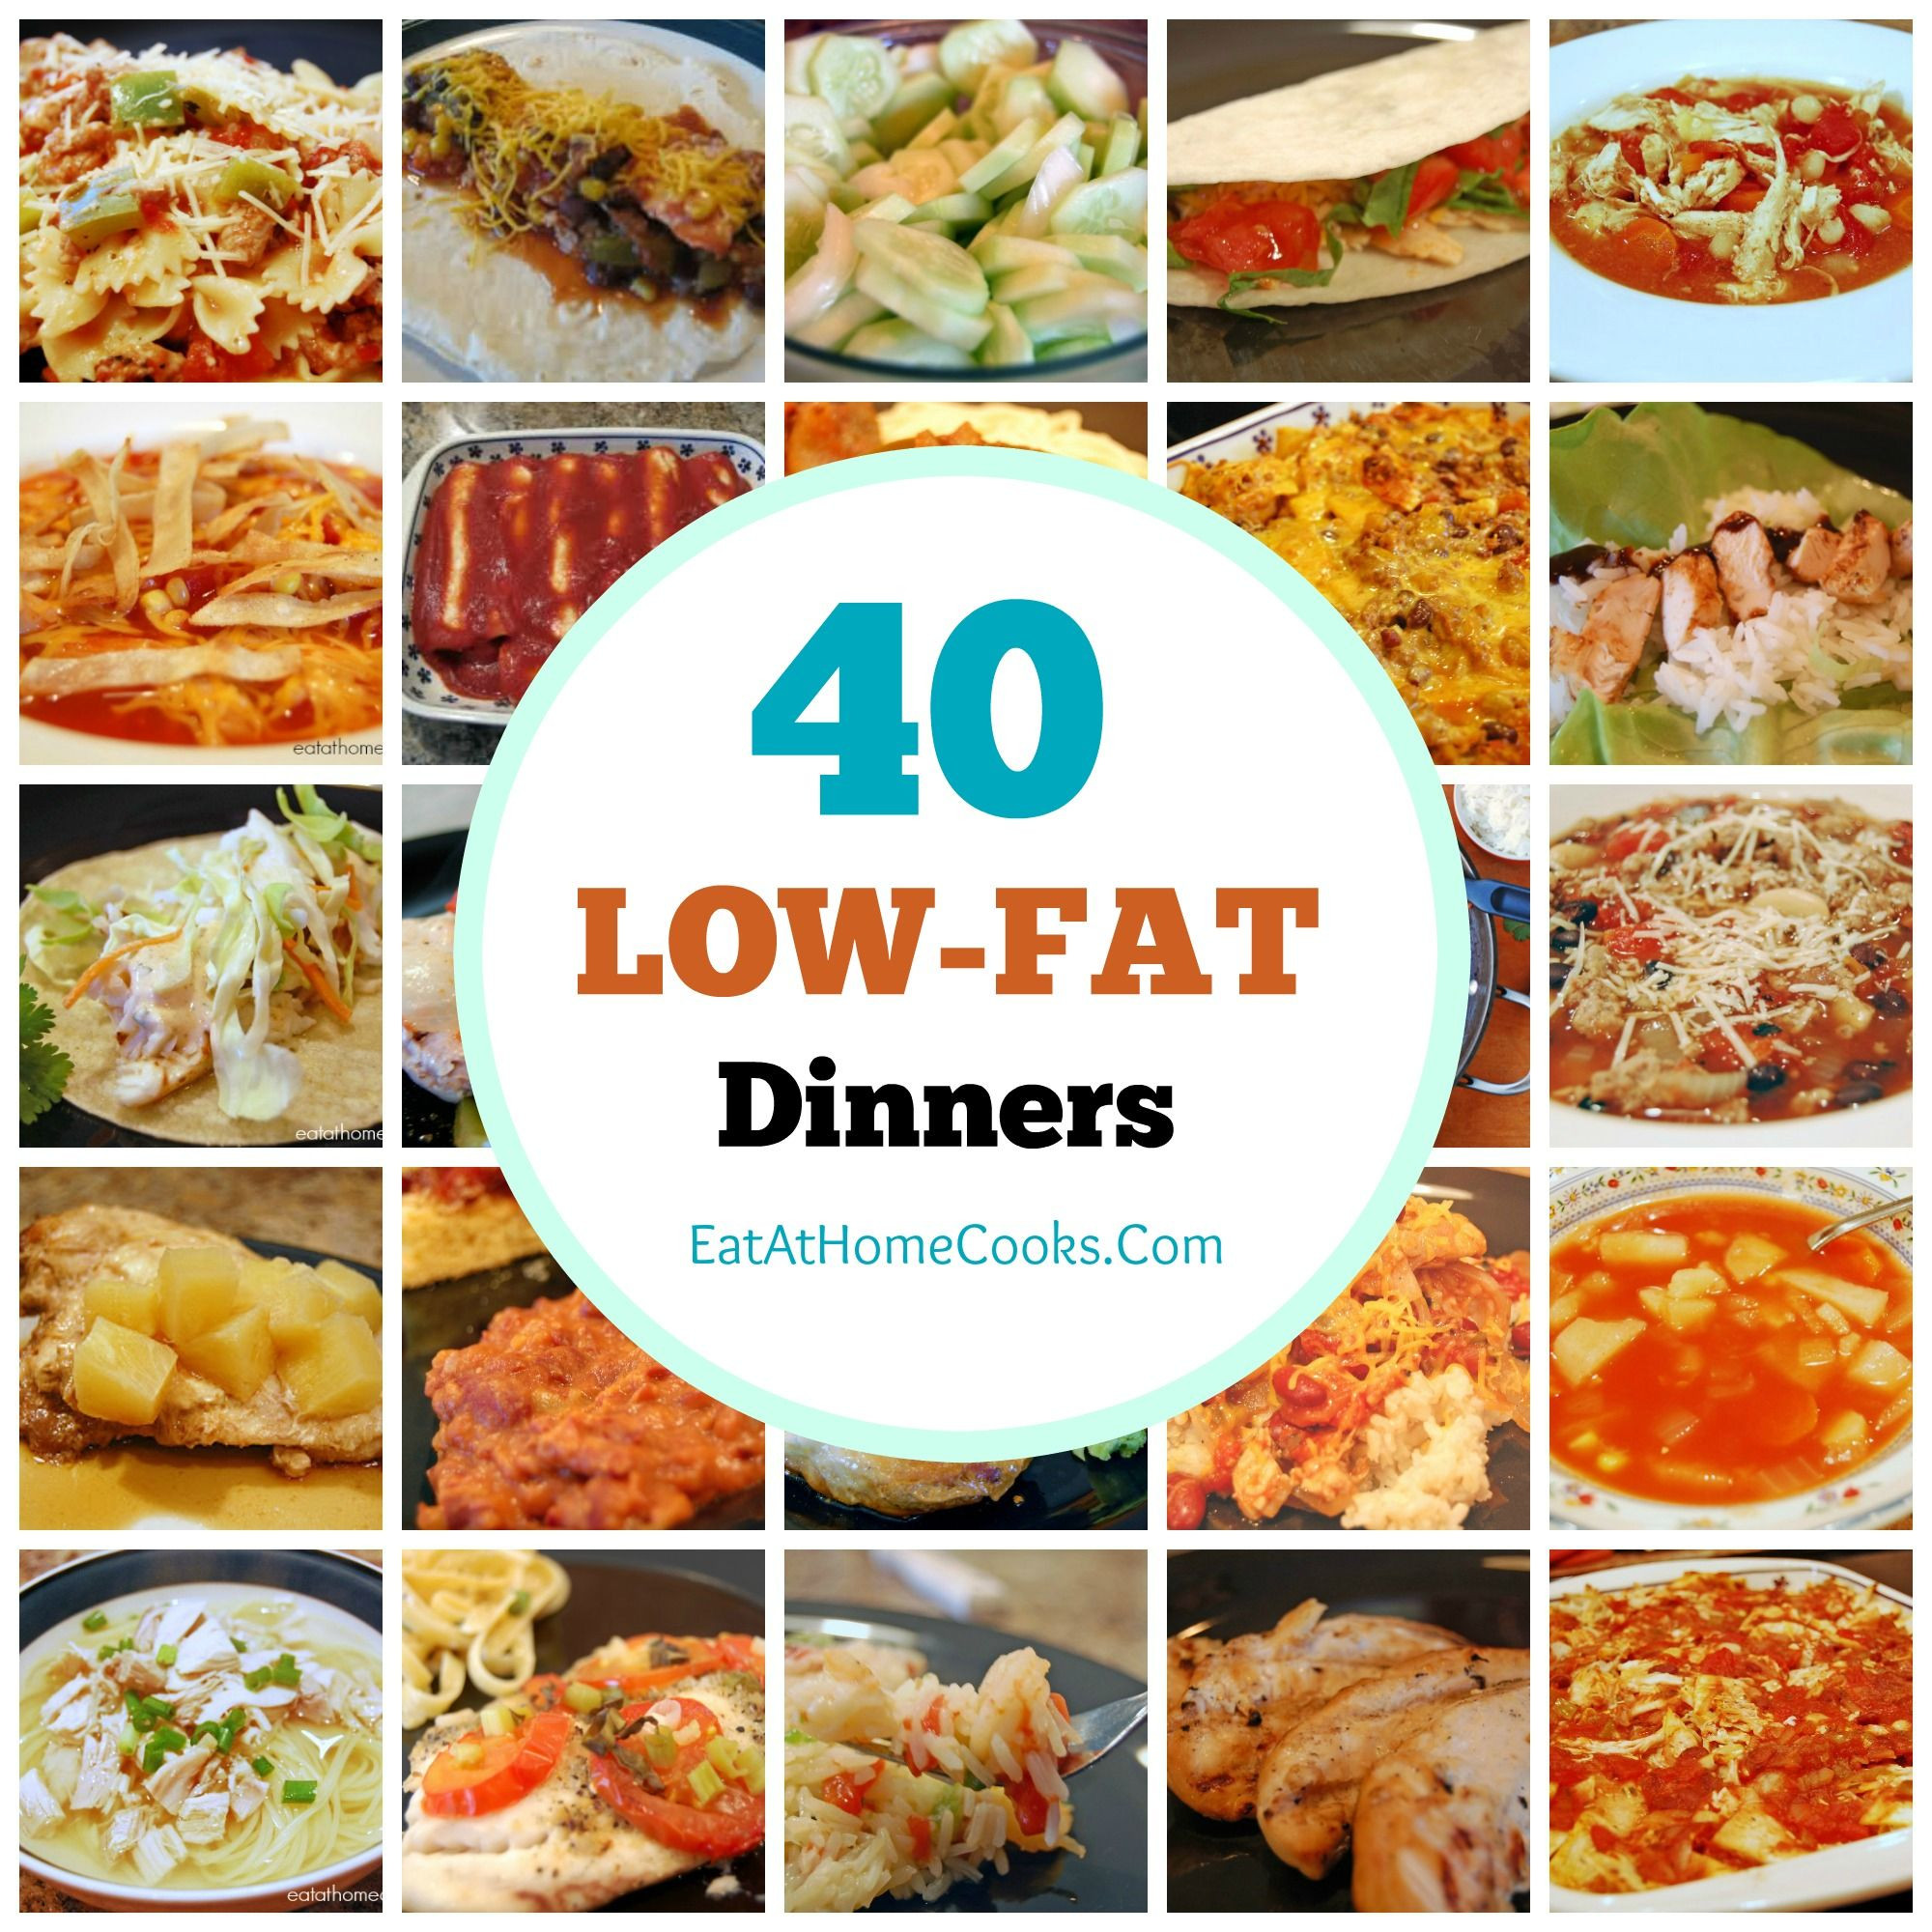 Low Fat Diet Recipes Beautiful Cholesterol Free Recipes for Dinner Vegan Pasta Bake